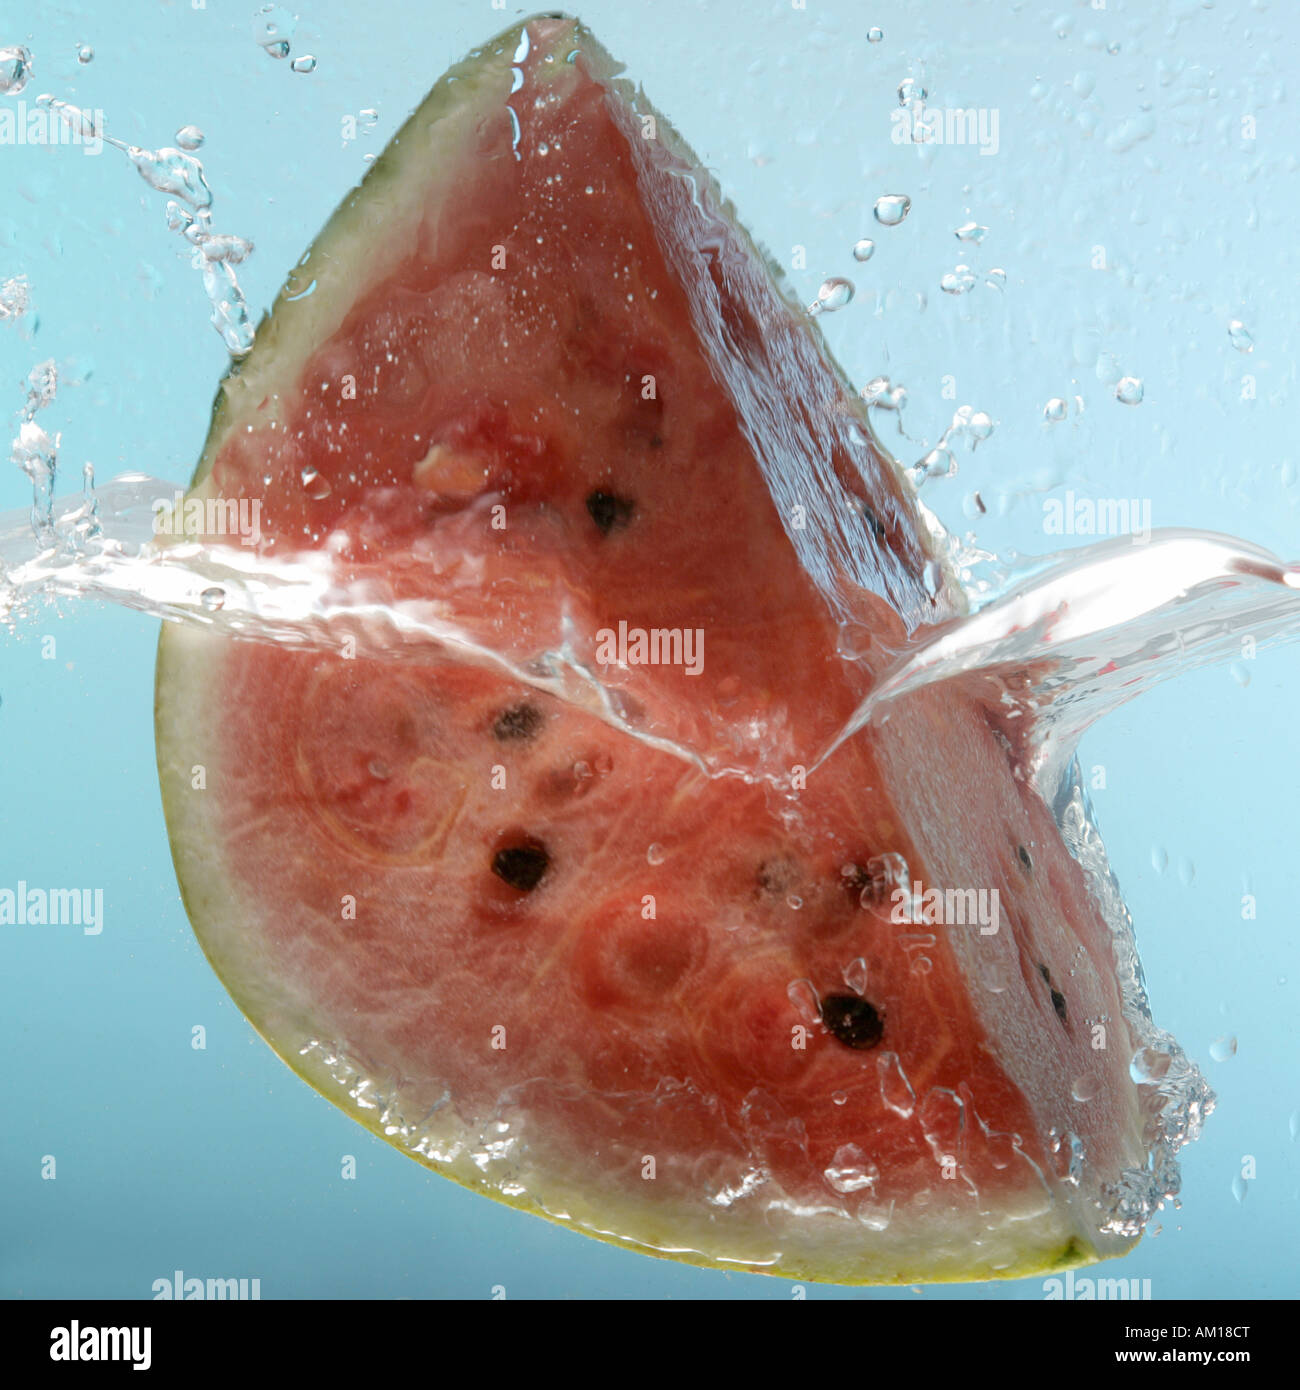 Watermelon falling into water Stock Photo